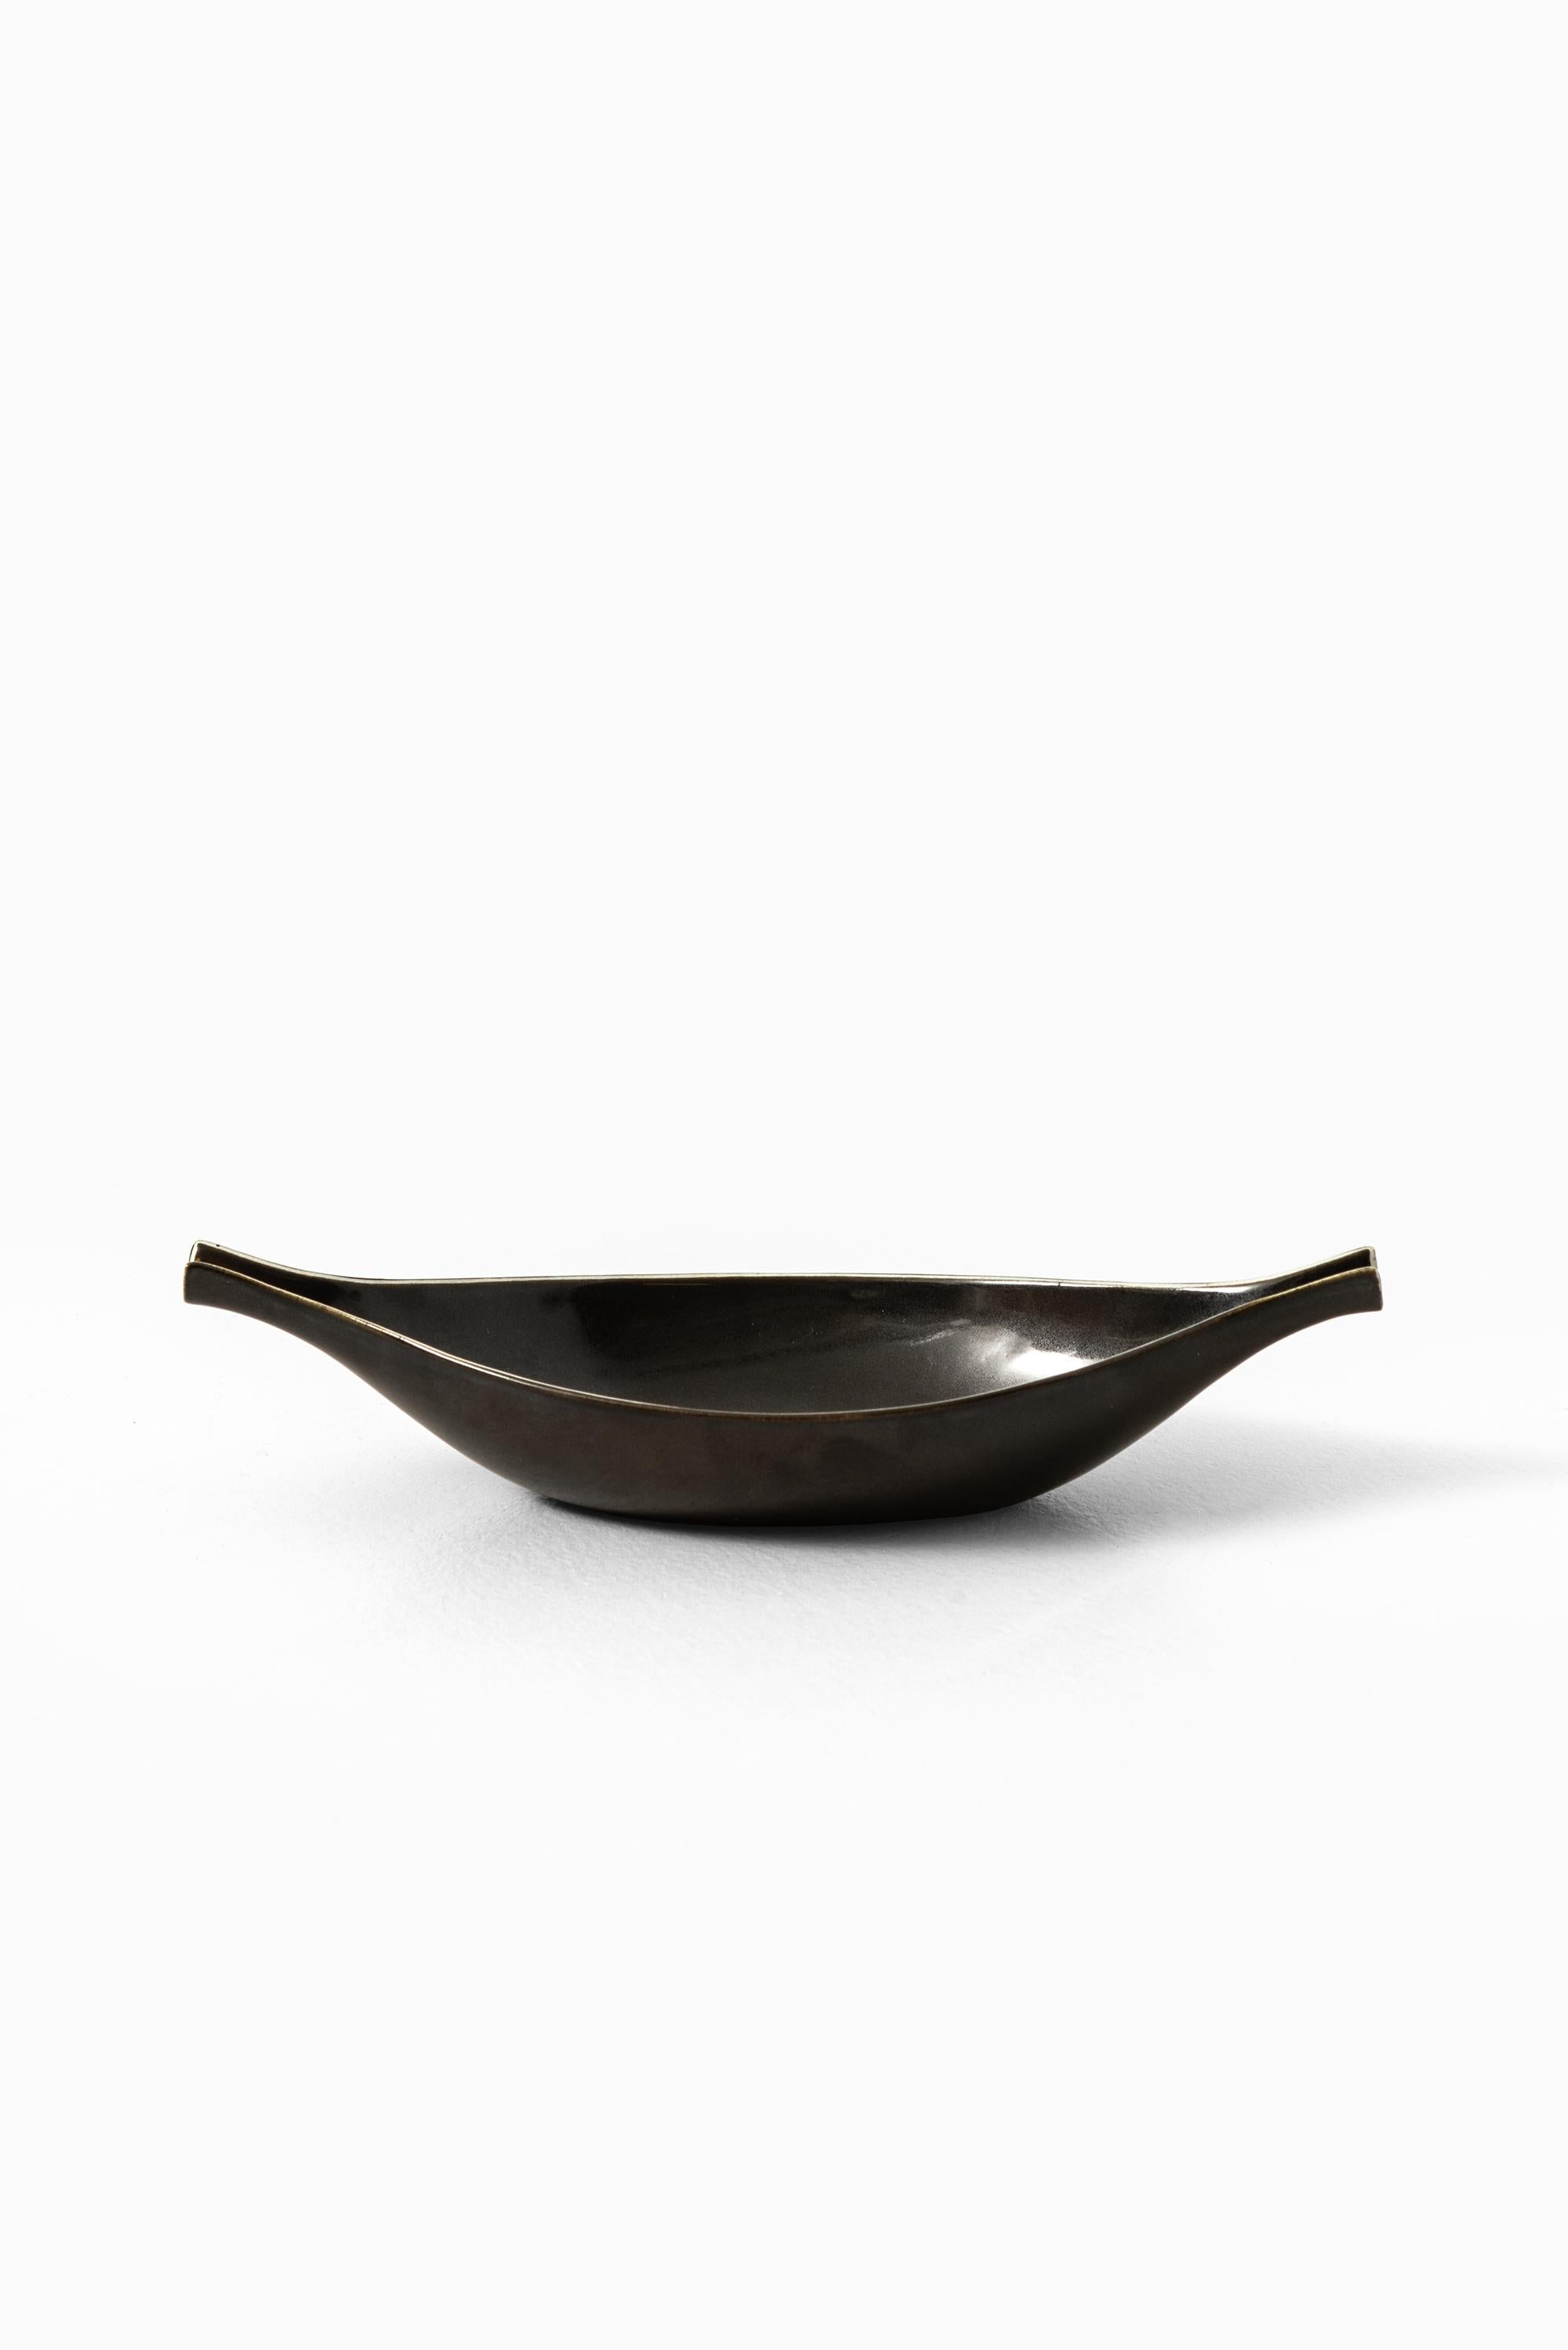 Ceramic tray model Pungo designed by Stig Lindberg. Produced by Gustavsberg in Sweden.